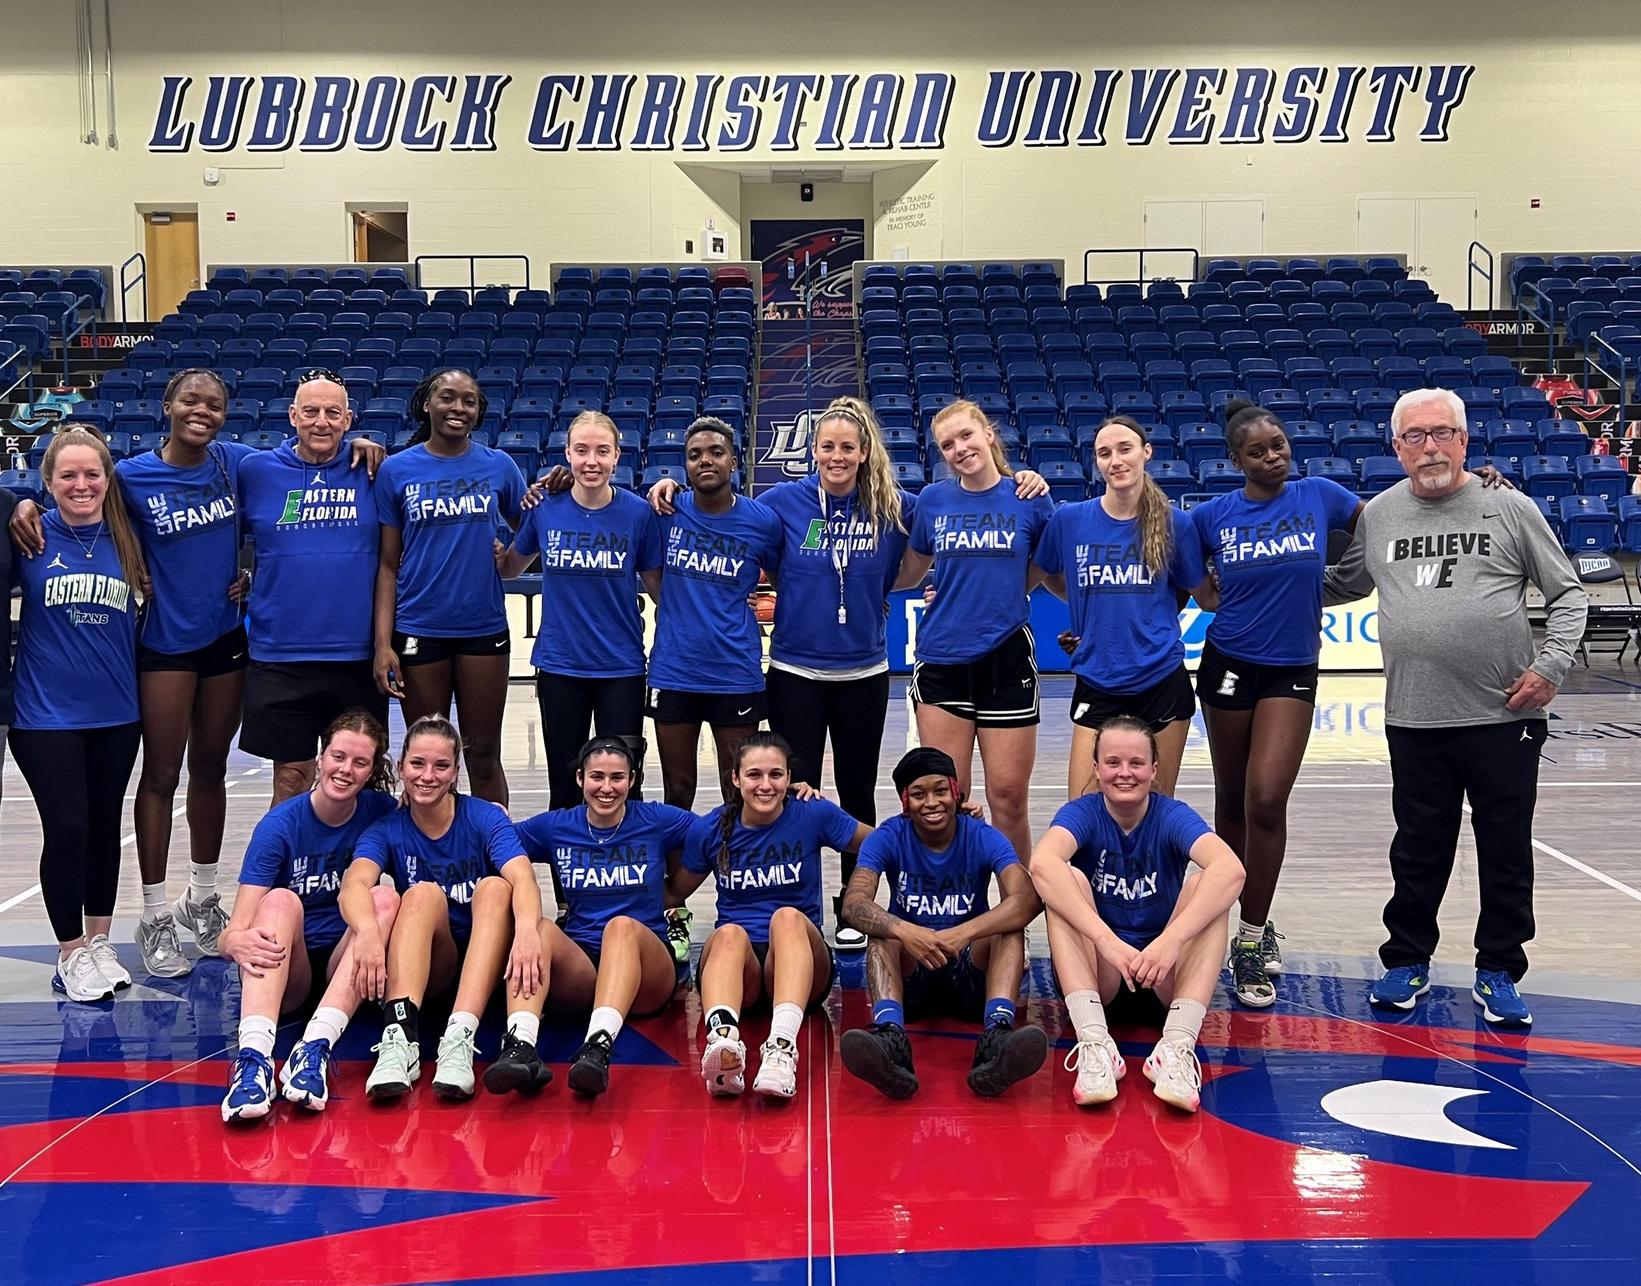 Women's basketball team in Lubbock for national tournament